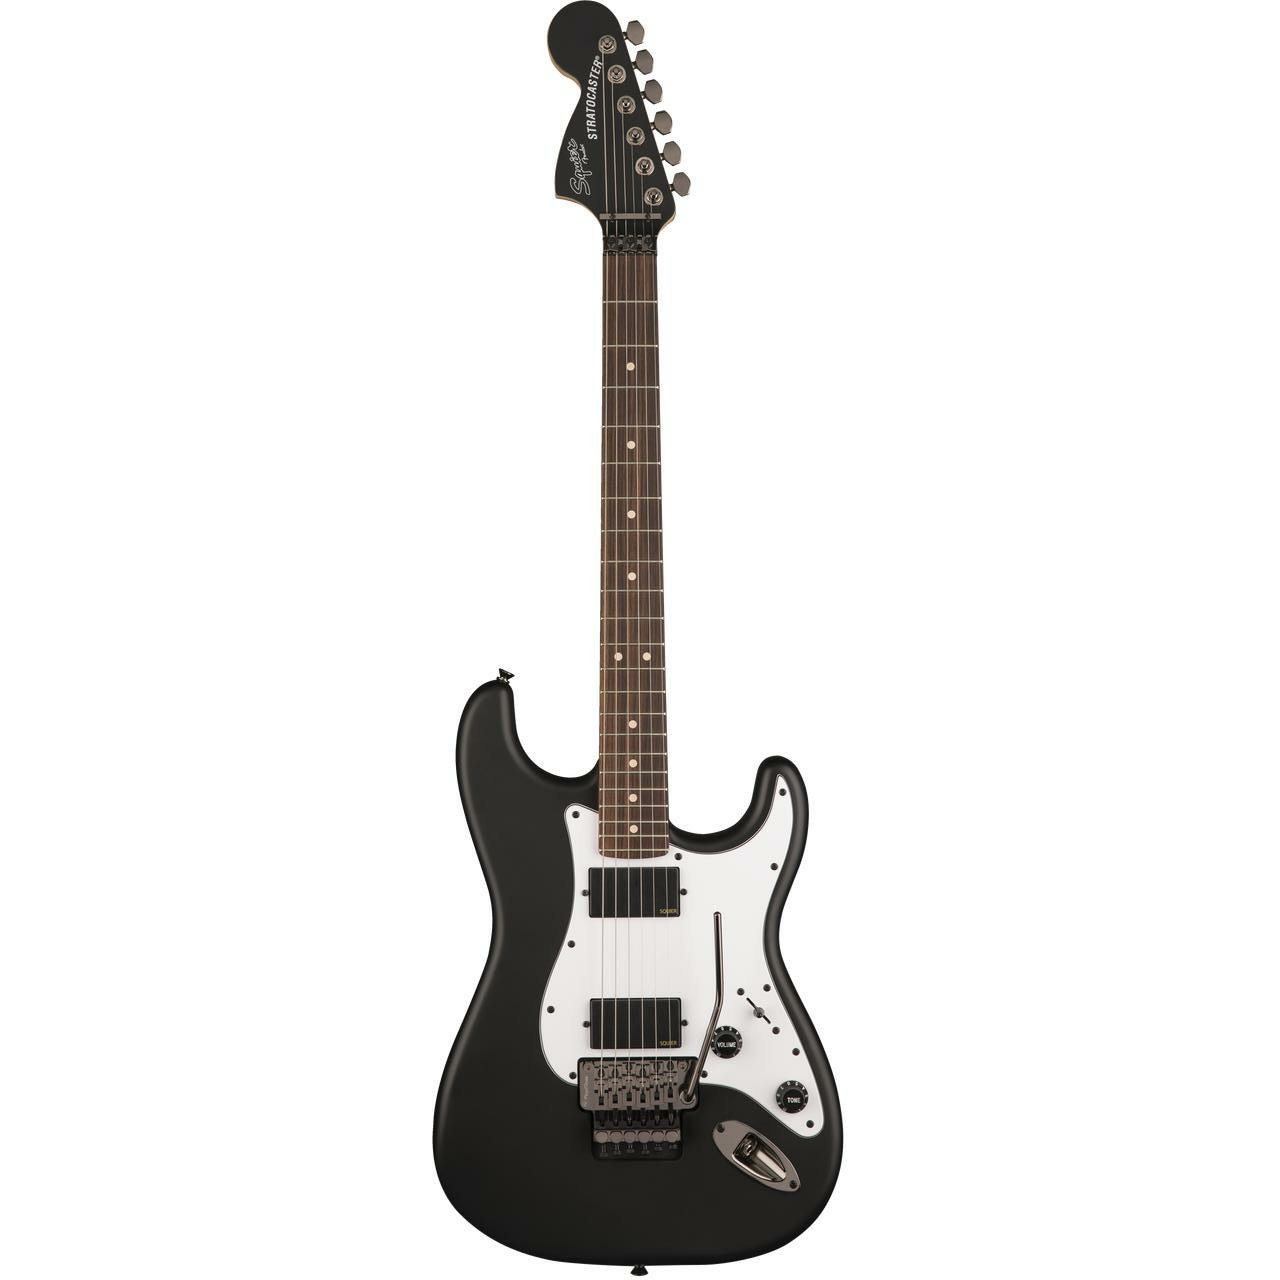 Характеристики электрогитары. Электрогитара Fender Tom Morello "Soul Power" Stratocaster Black. Yamaha Pacifica 212vq m. Электрогитара Aria STG-STV. Электрогитара Cort g250lh.